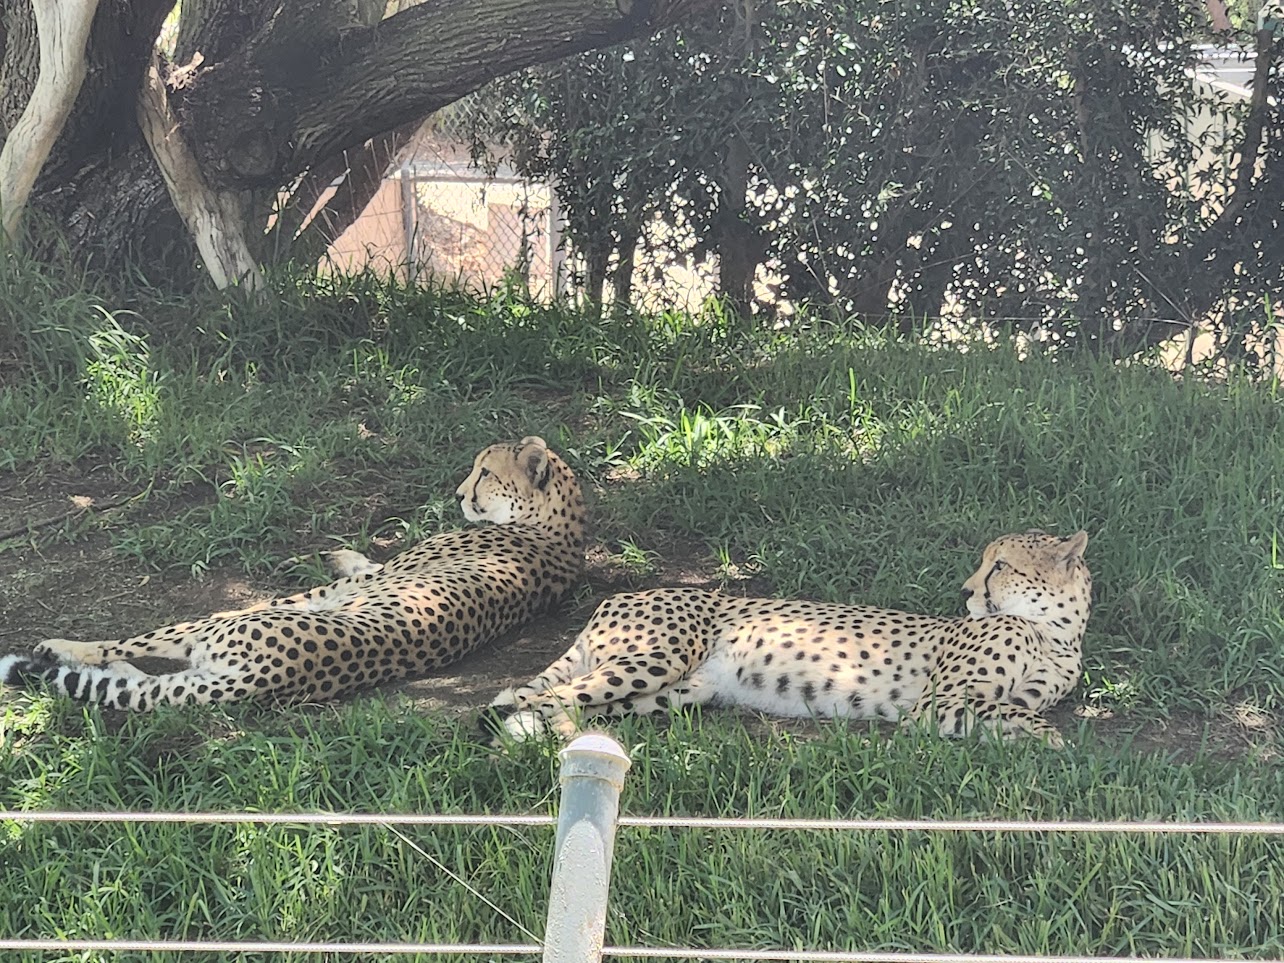 Two cheetahs relaxing